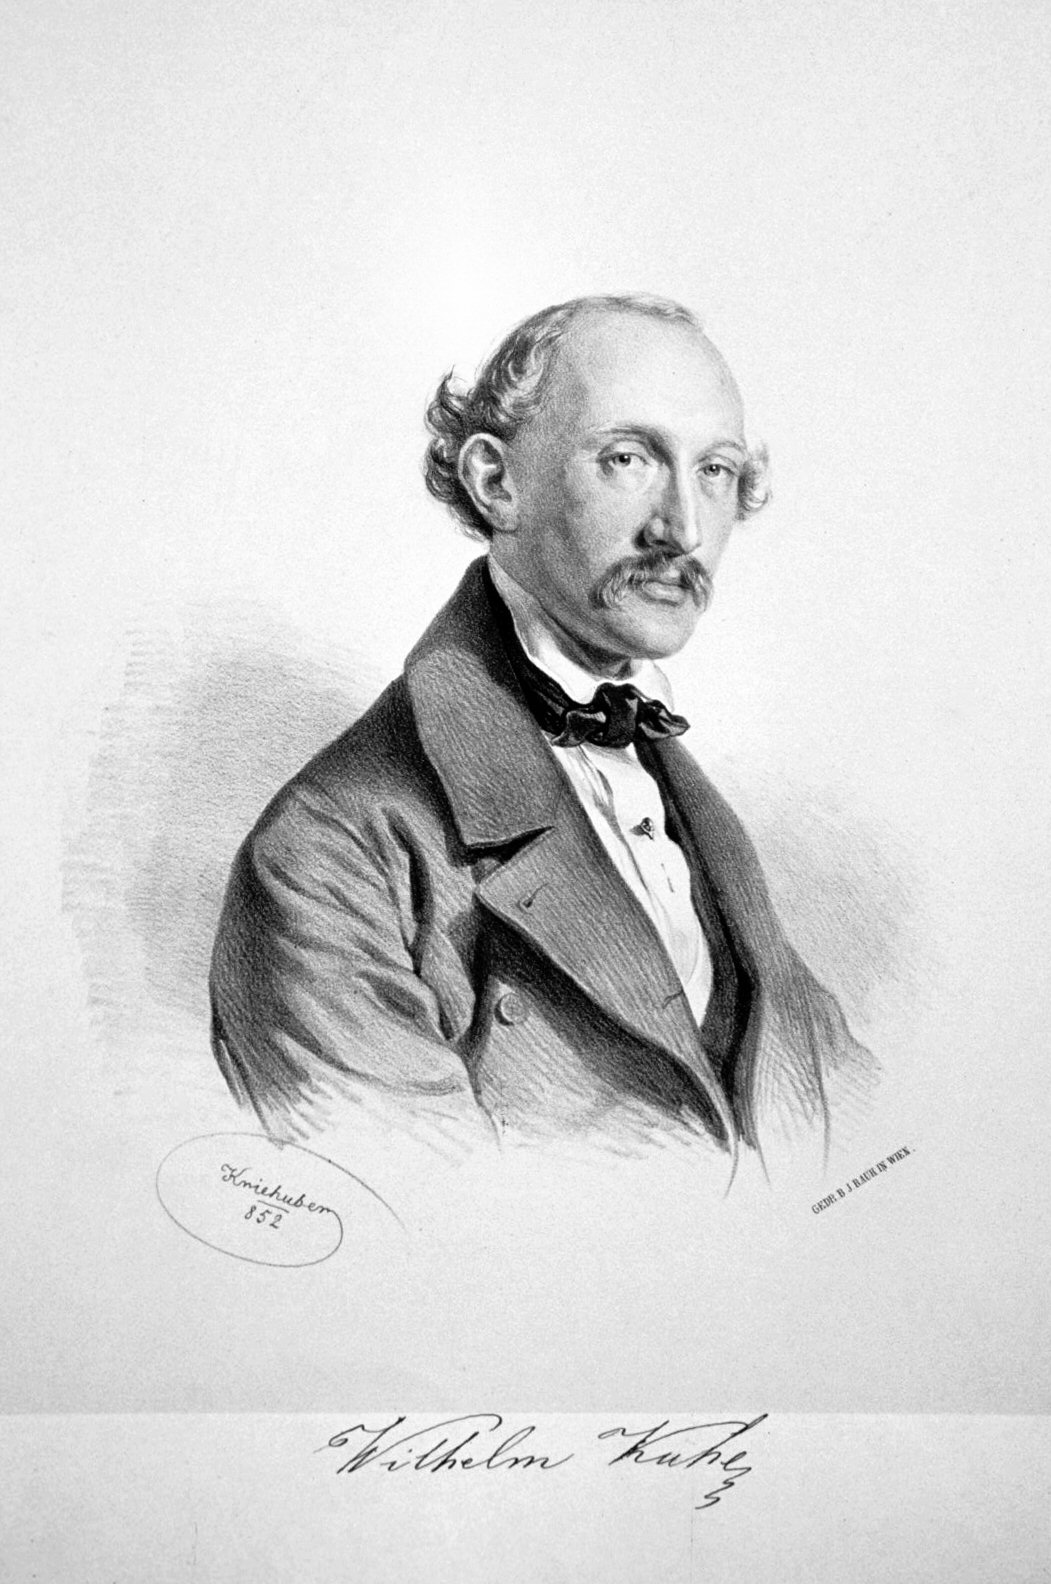 Wilhelm Kuhe